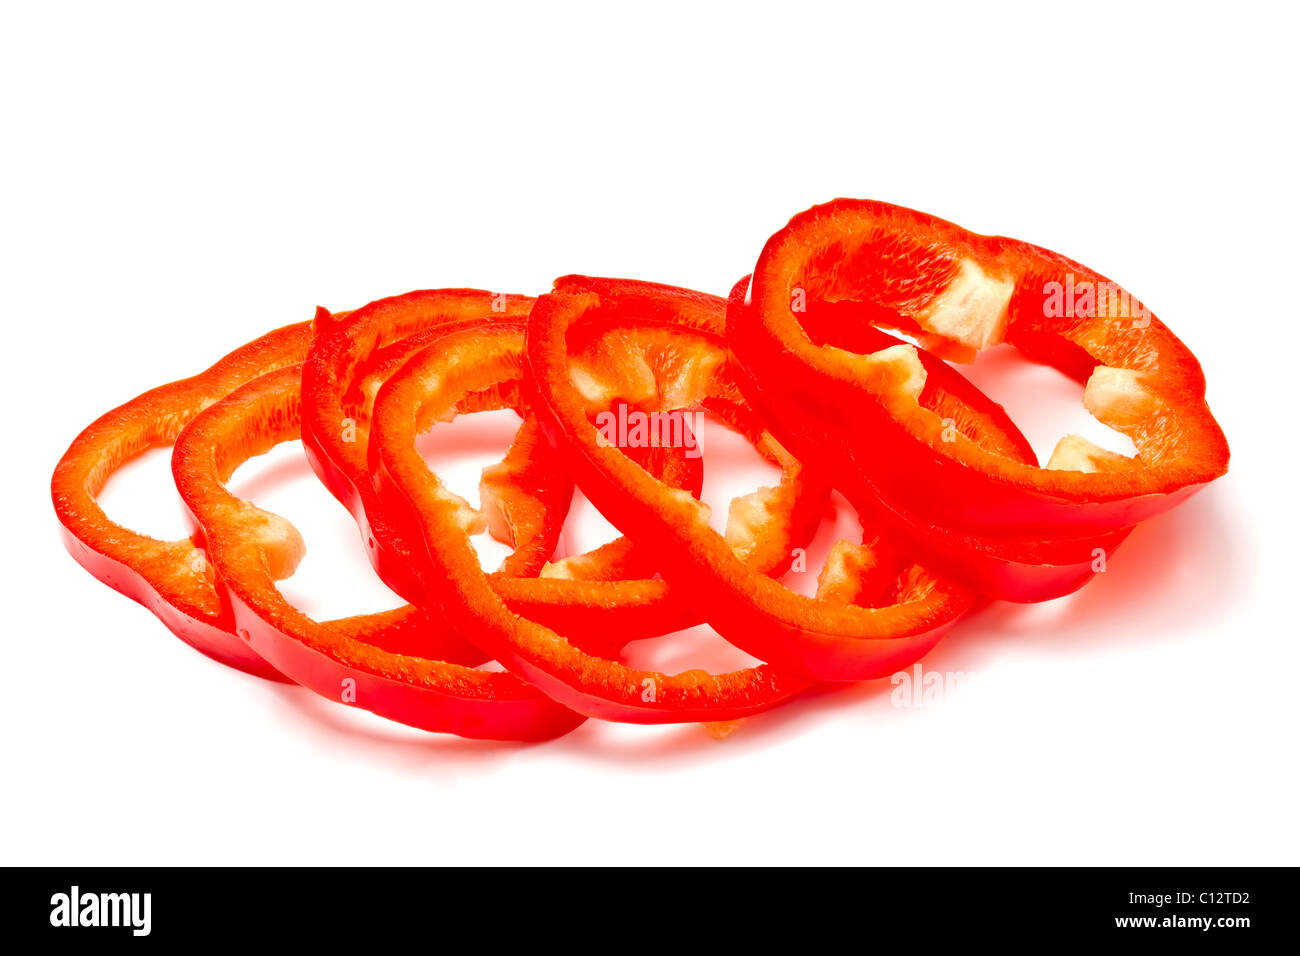 Sliced red pepper on white background Stock Photo